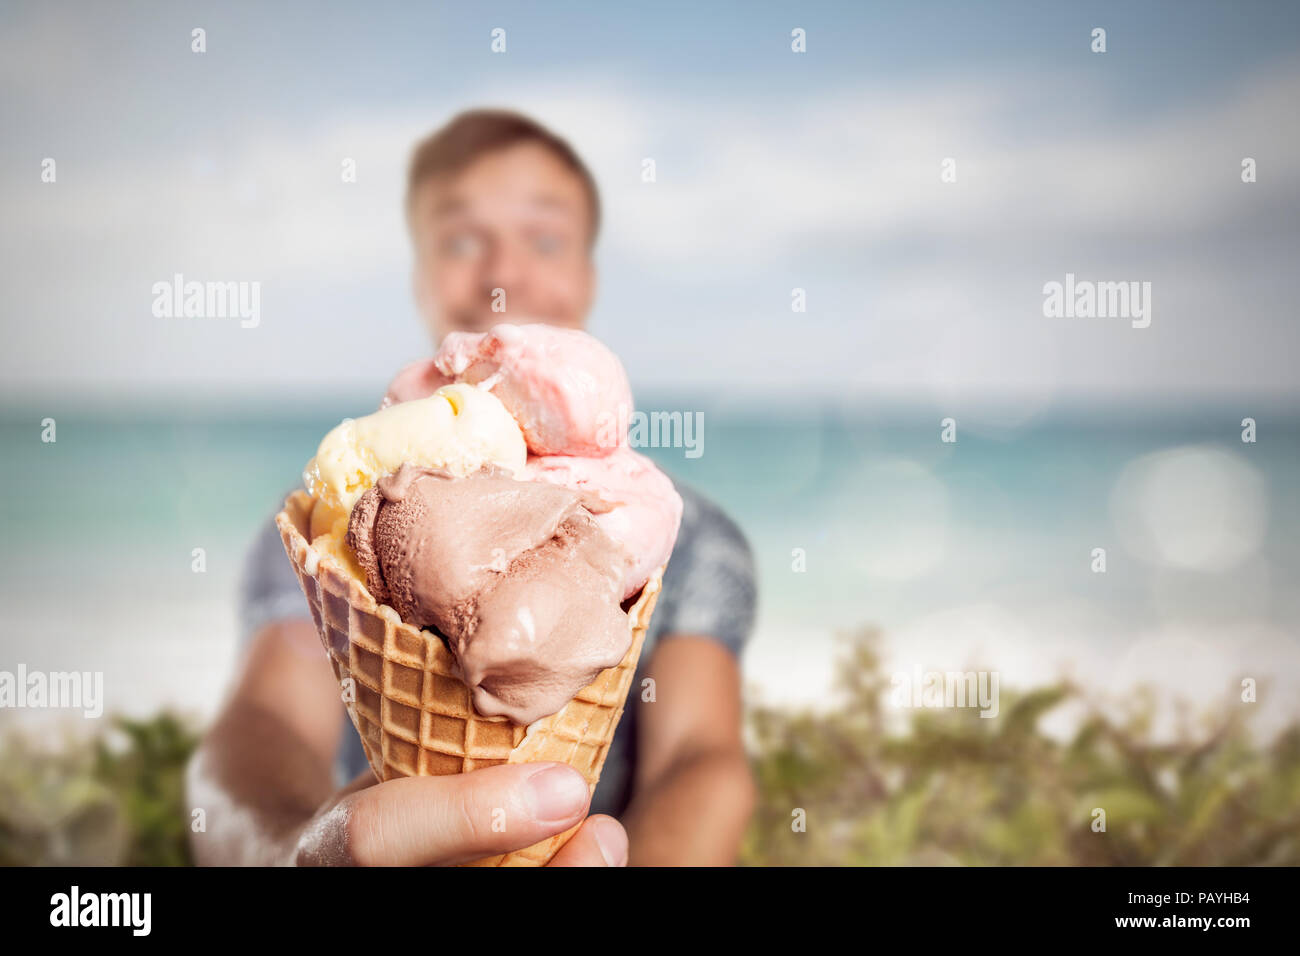 Man holding a large ice cream cone Stock Photo